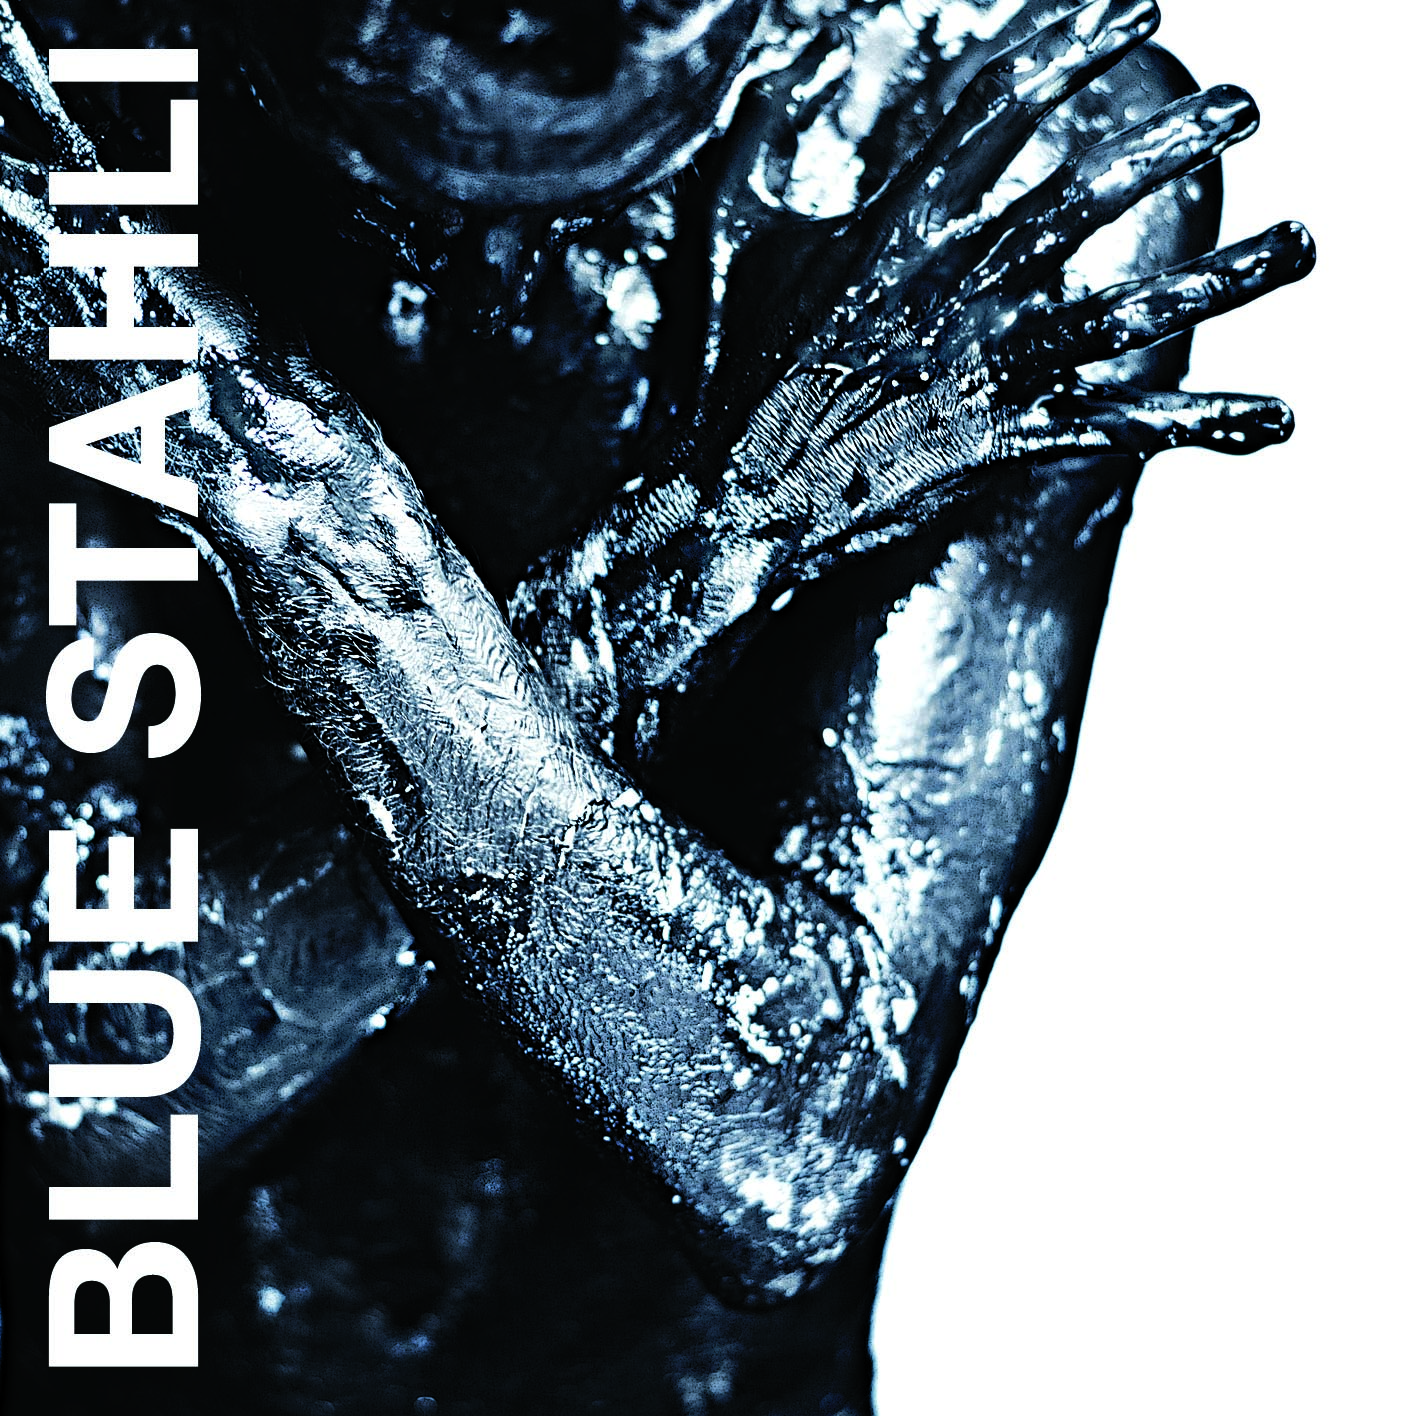 You kill me every time cut | Blue Stahli